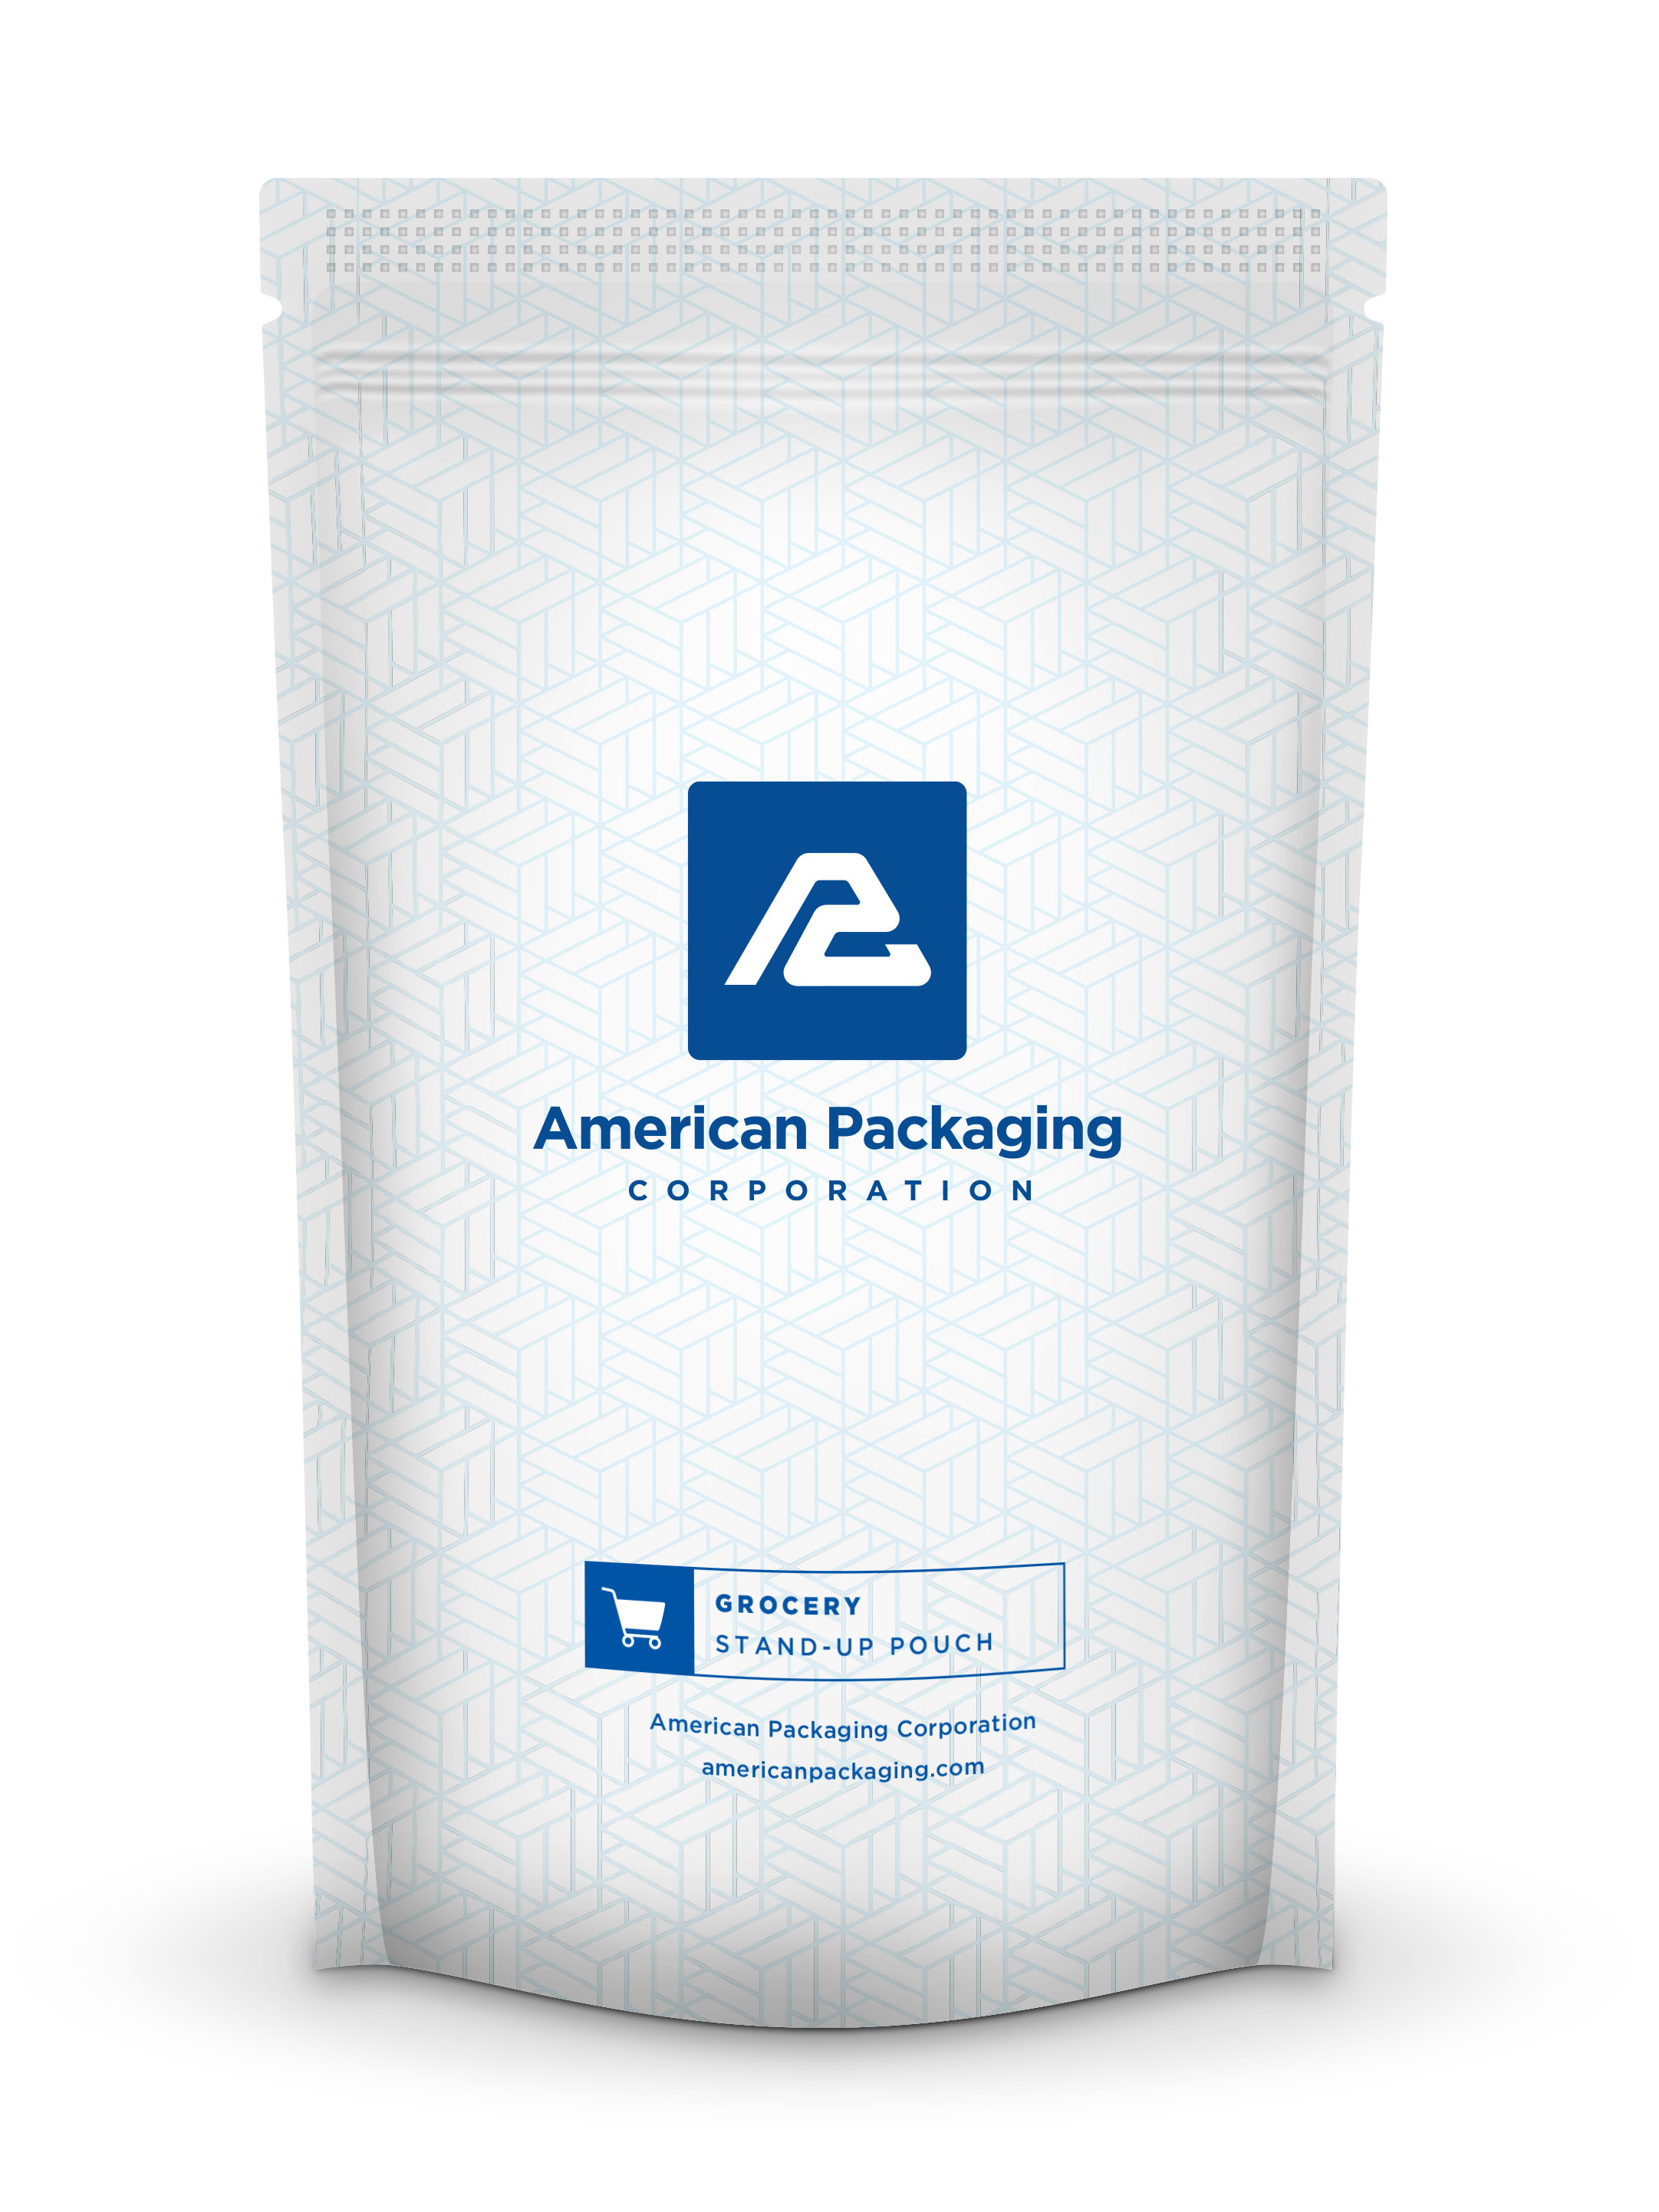 APC package